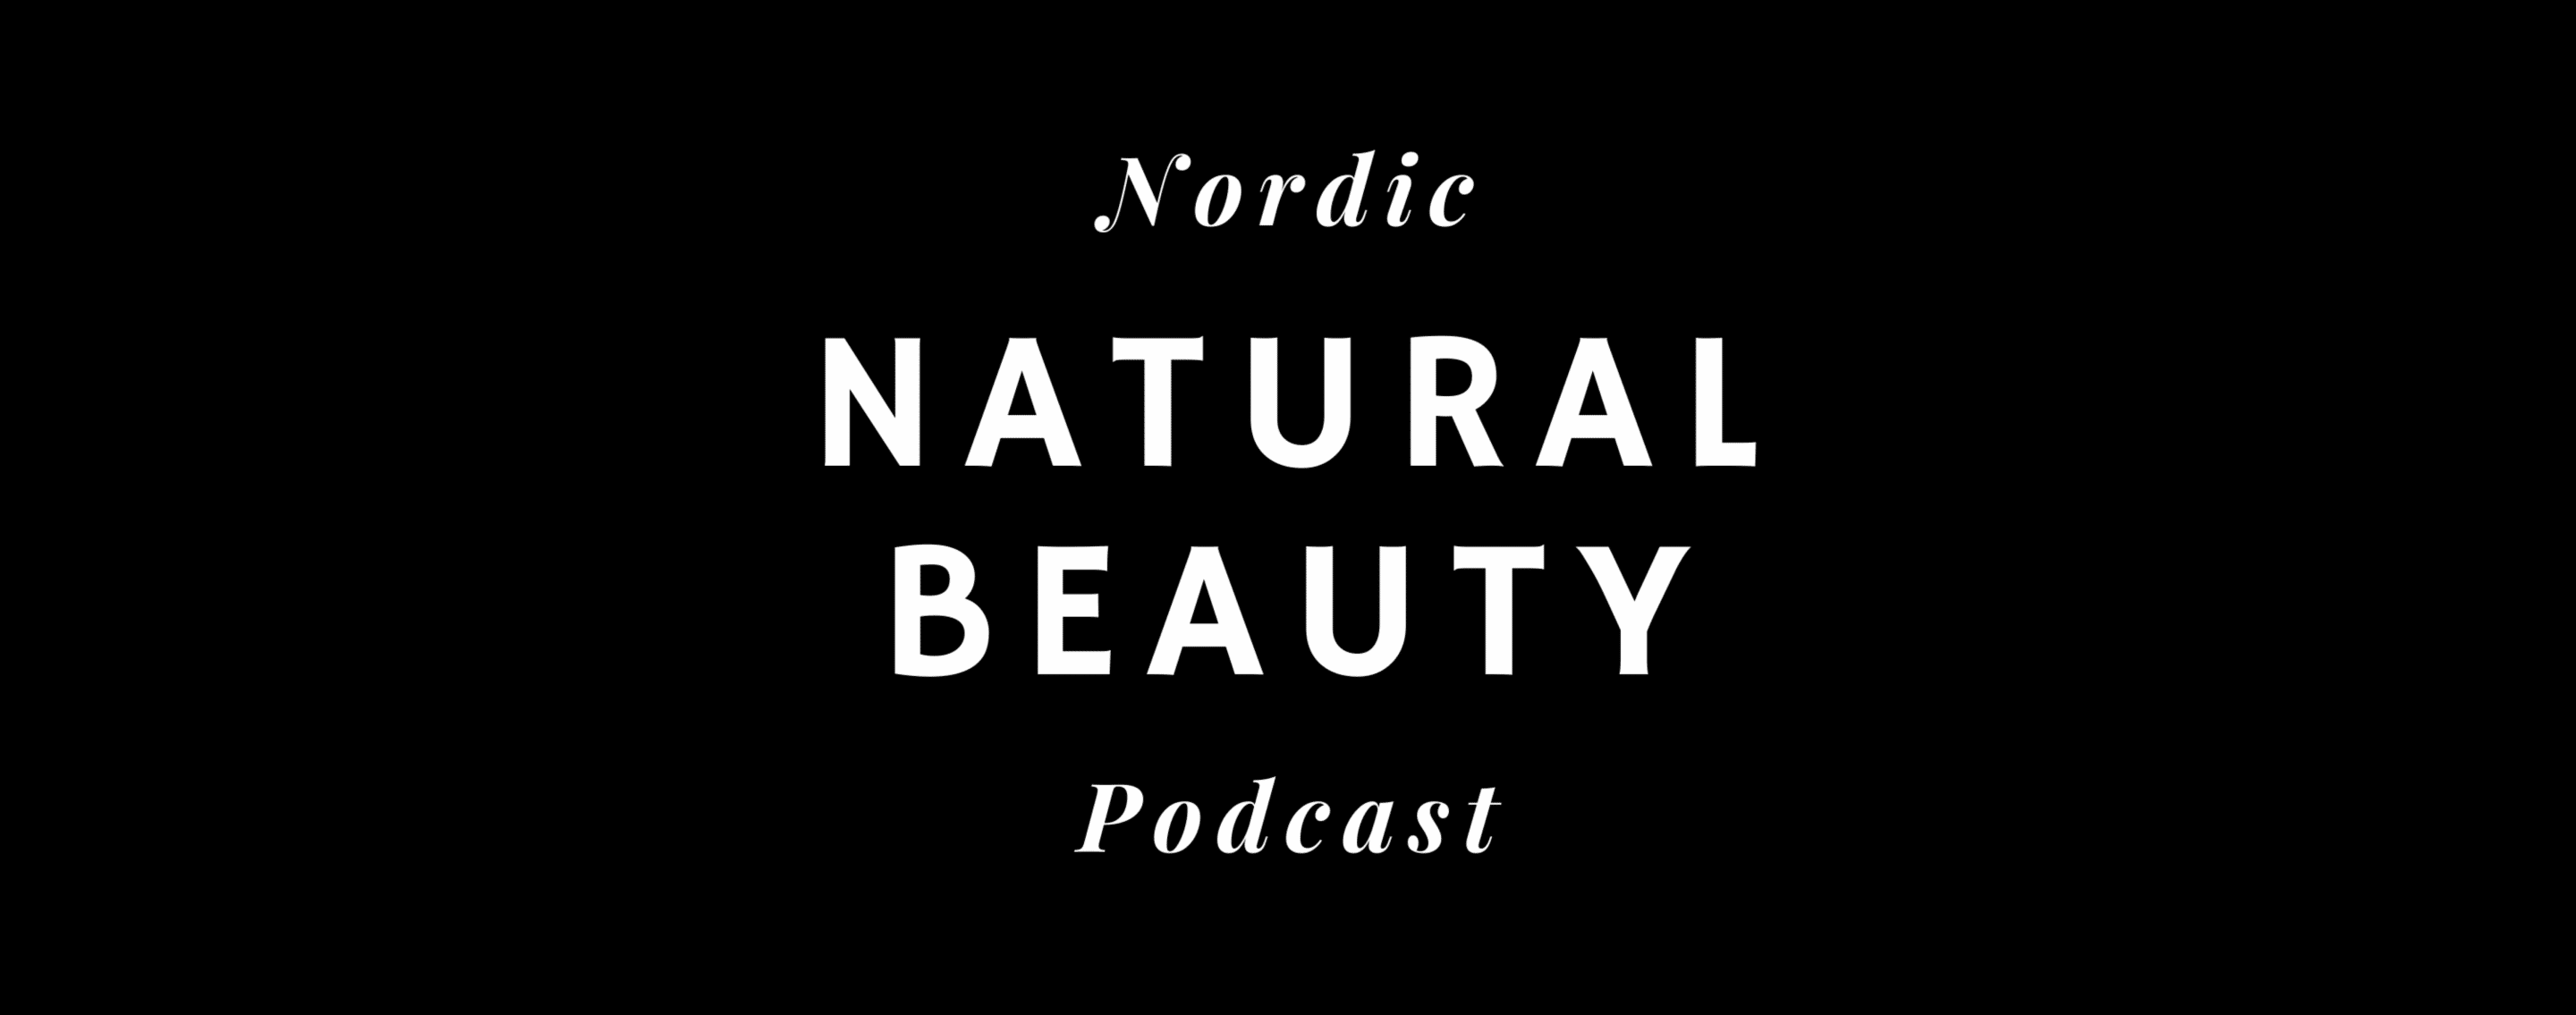 nordic-natural-beauty-podcast-awards-satu-makinen-scandinavian-skincare-haircare-trending